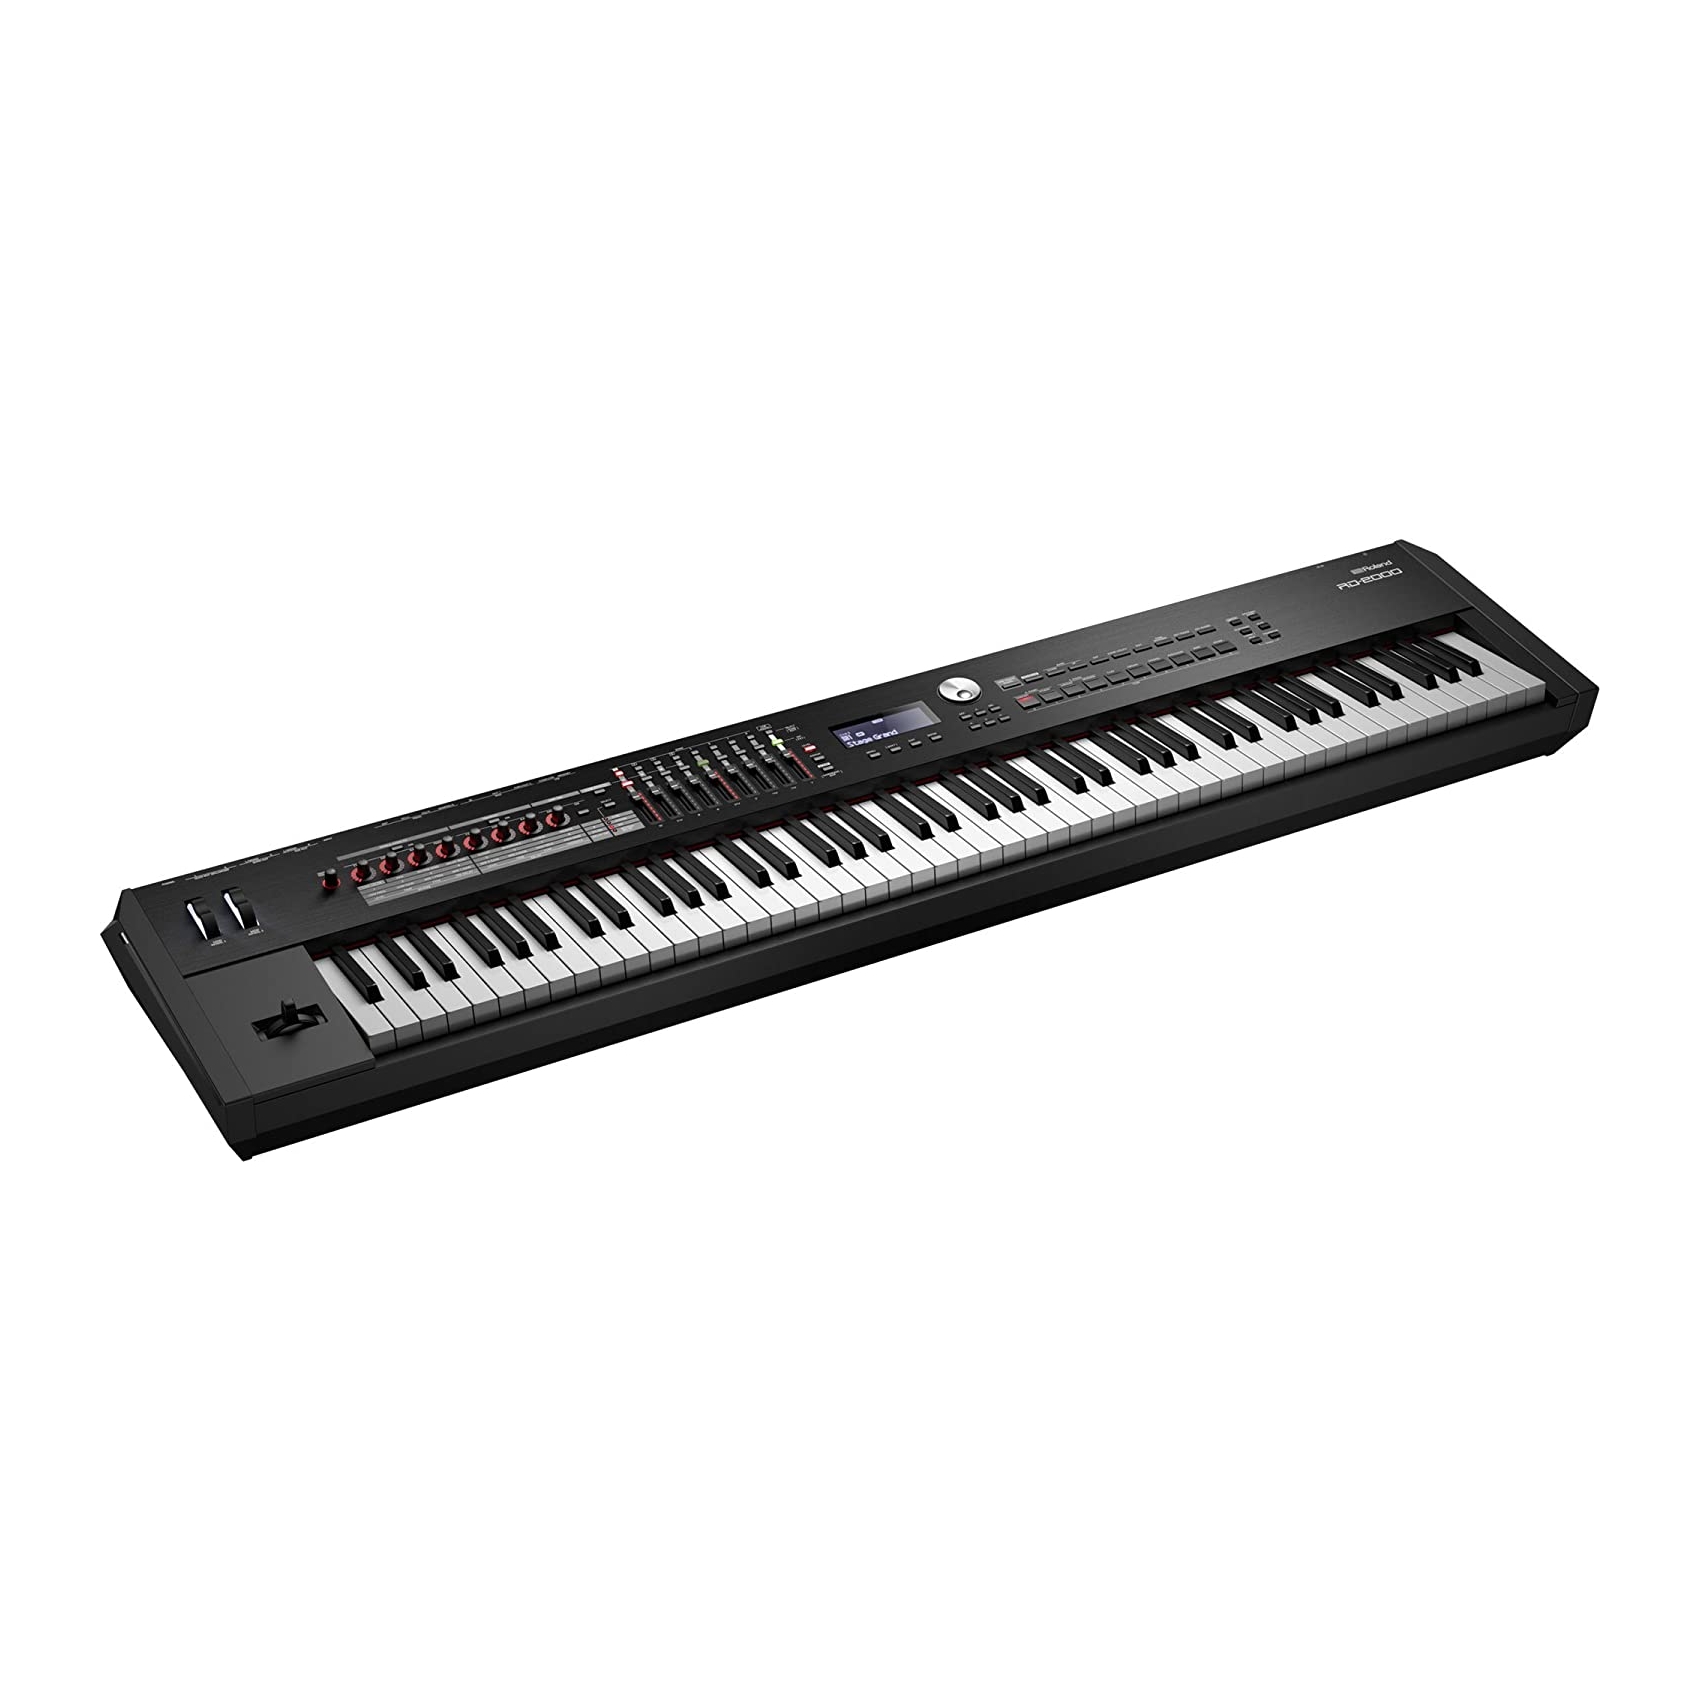 ROLAND RD-2000 - цифровое фортепиано, 88 клавиш (PHA-4 Concert Keyboard с функцией Escapement)